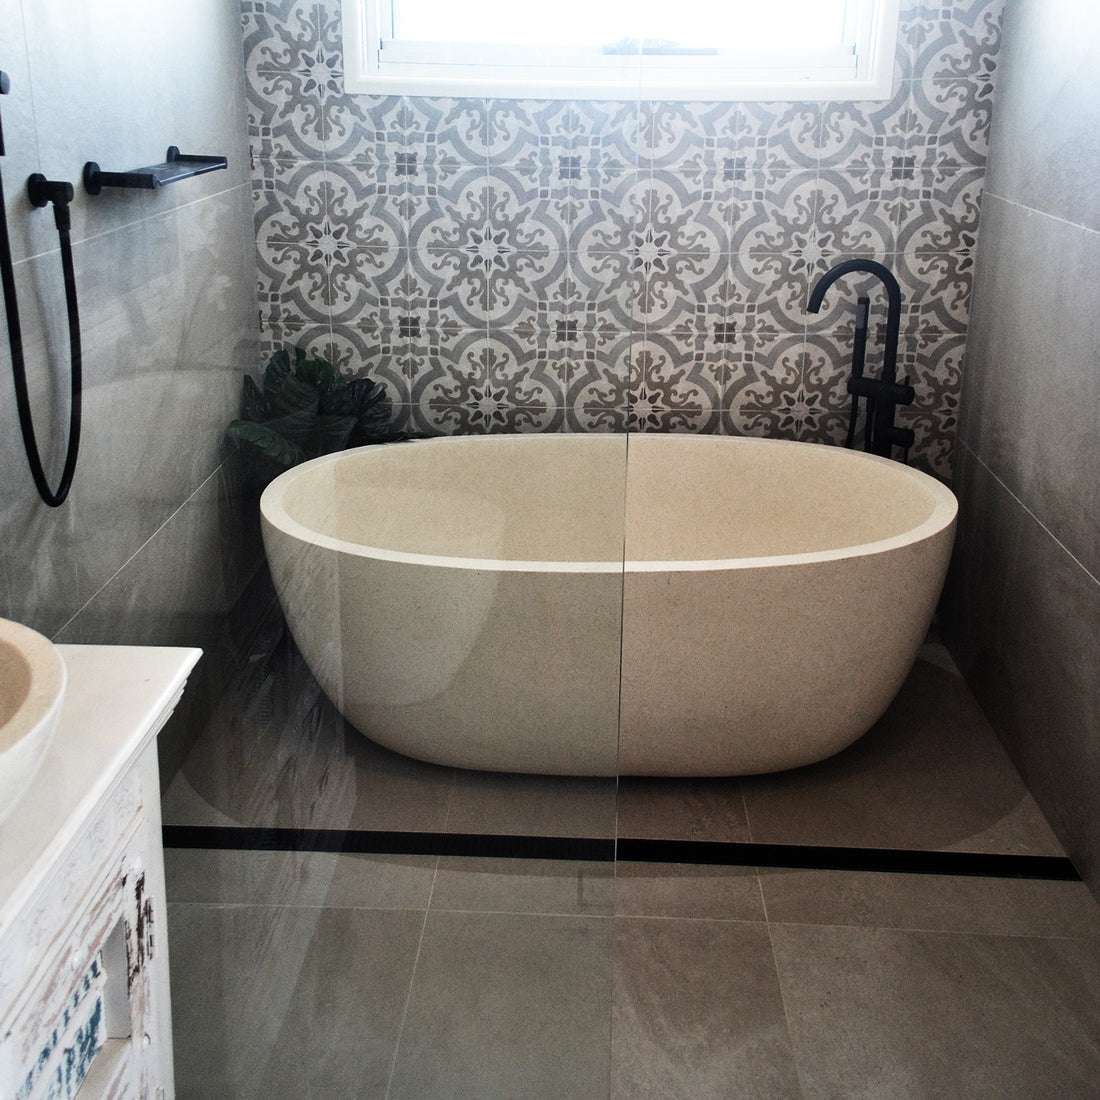 Oval Concrete Terrazzo Stone Bath 1500x900x550mm - Sandy White